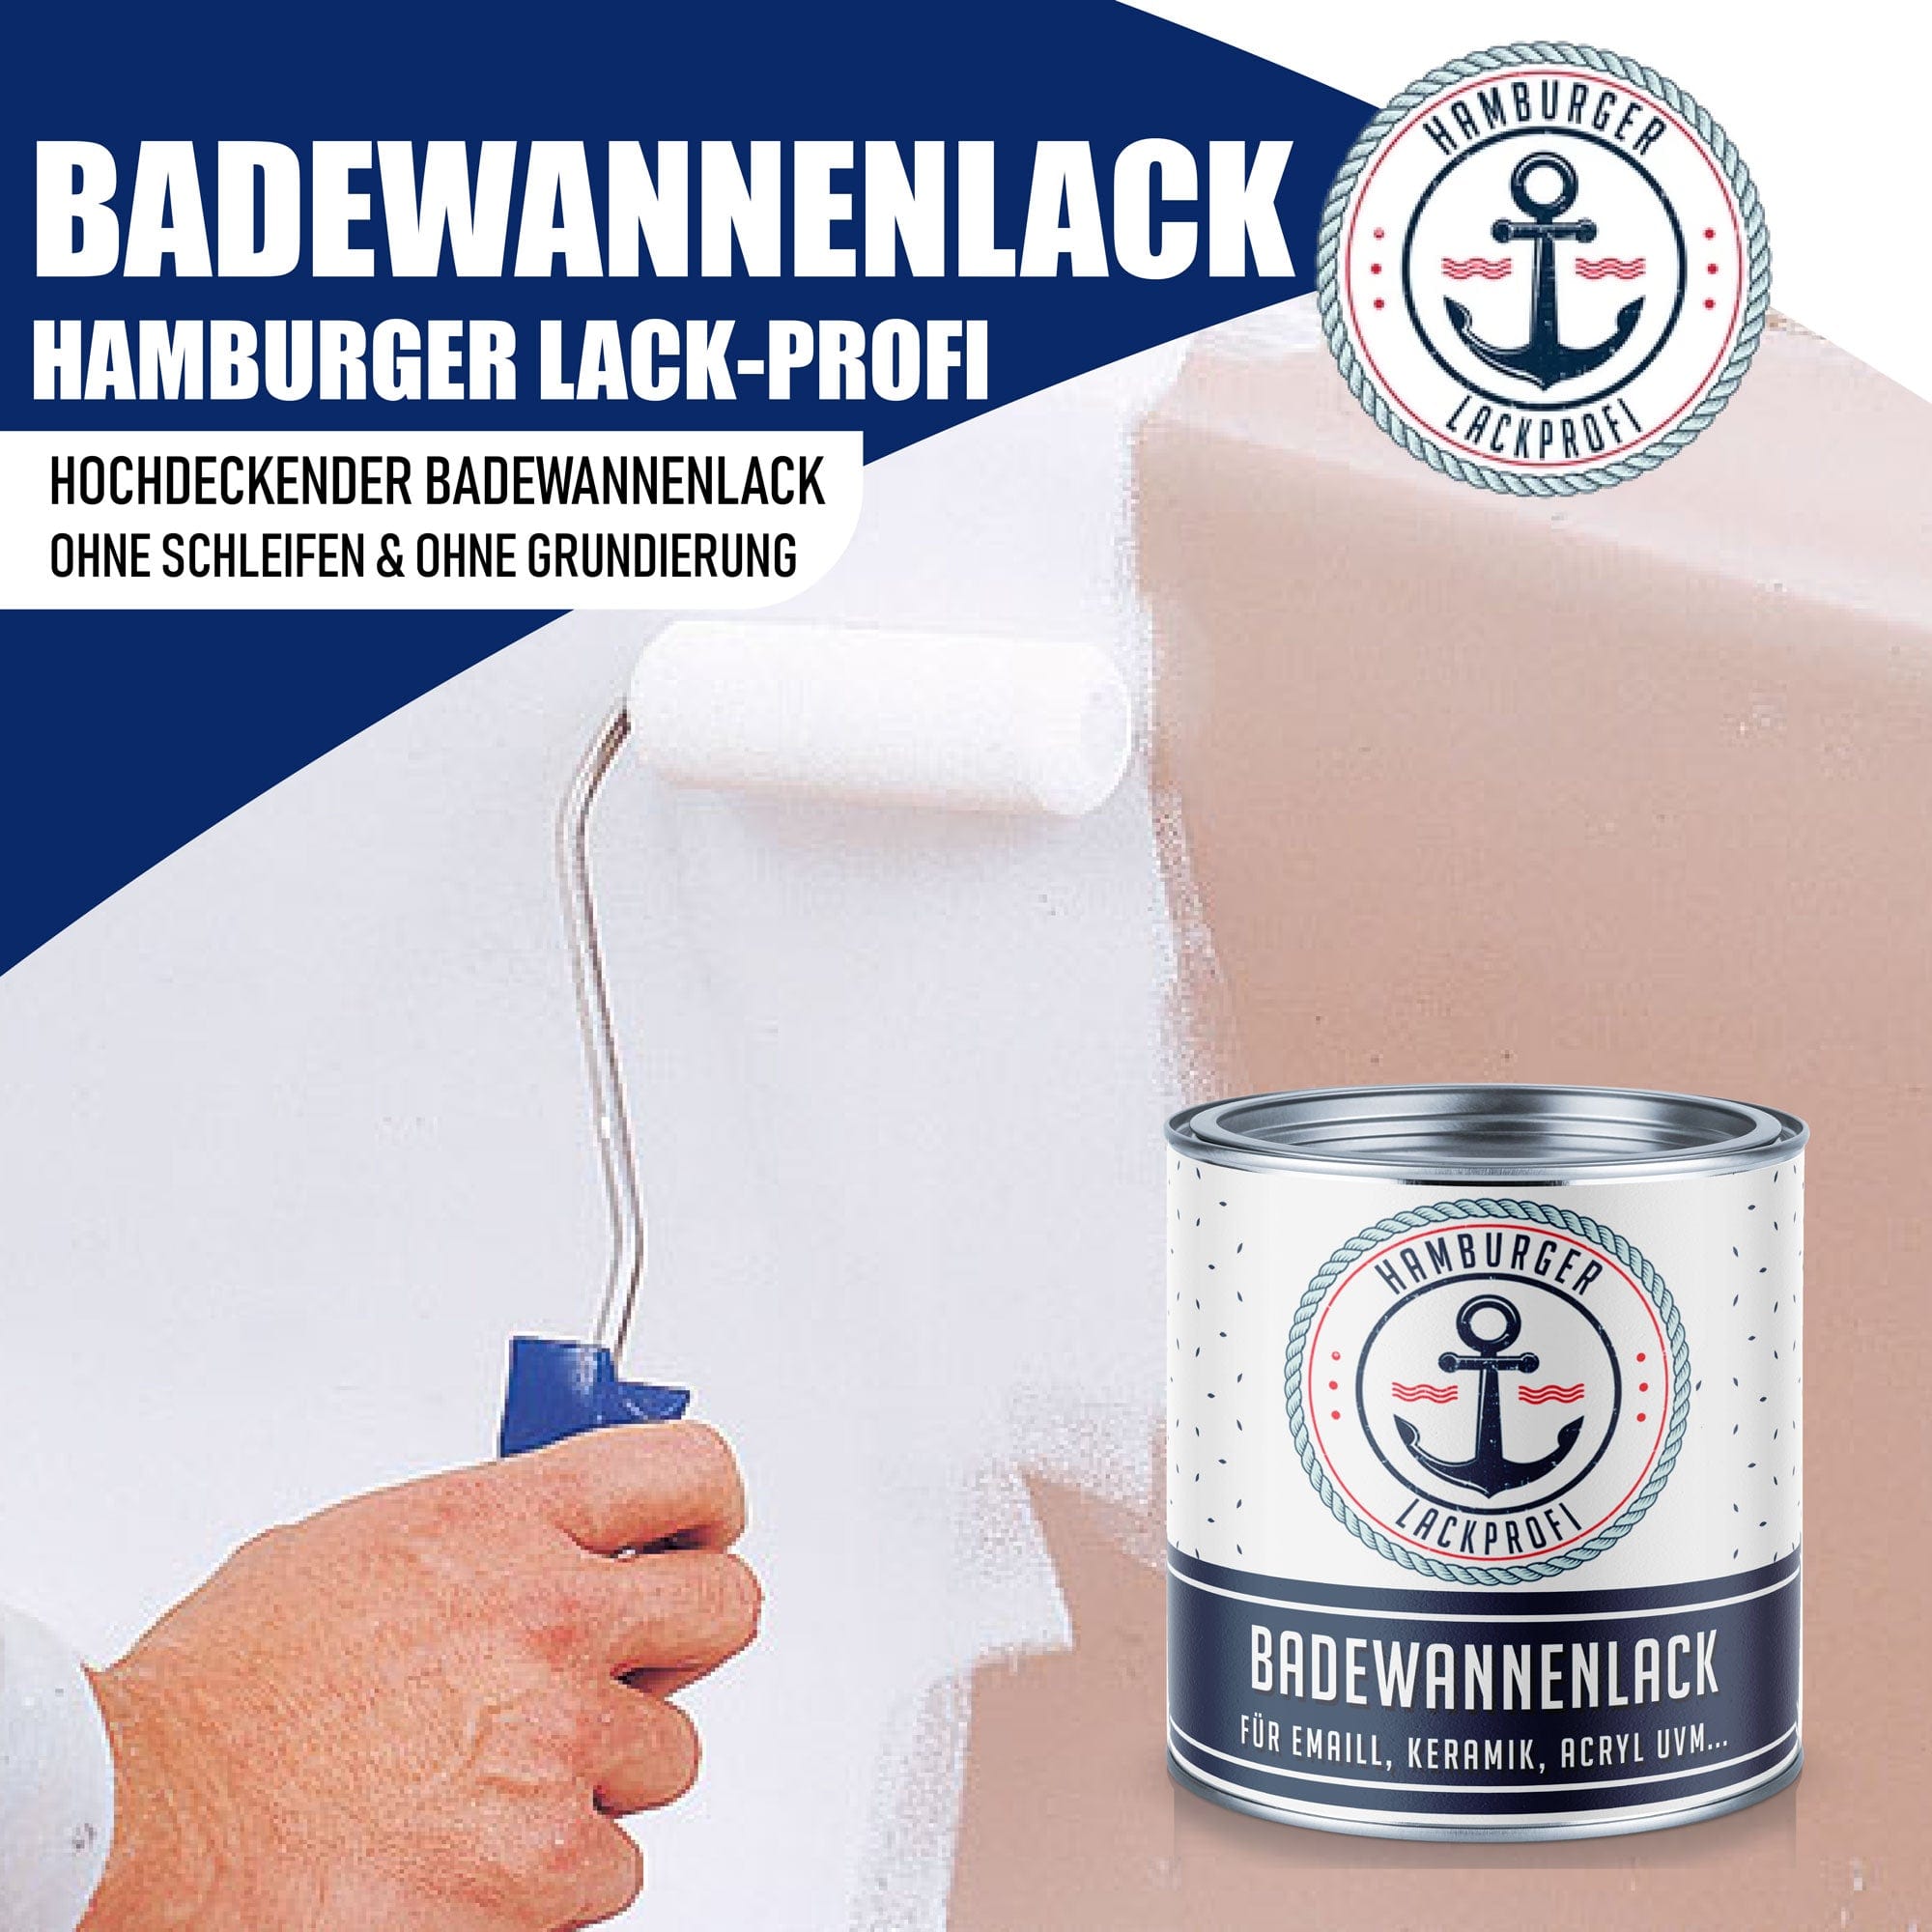 Hamburger Lack-Profi Badewannenlack Hamburger Lack-Profi 2K Badewannenlack Dahliengelb RAL 1033 - Glänzend / Seidenmatt / Matt